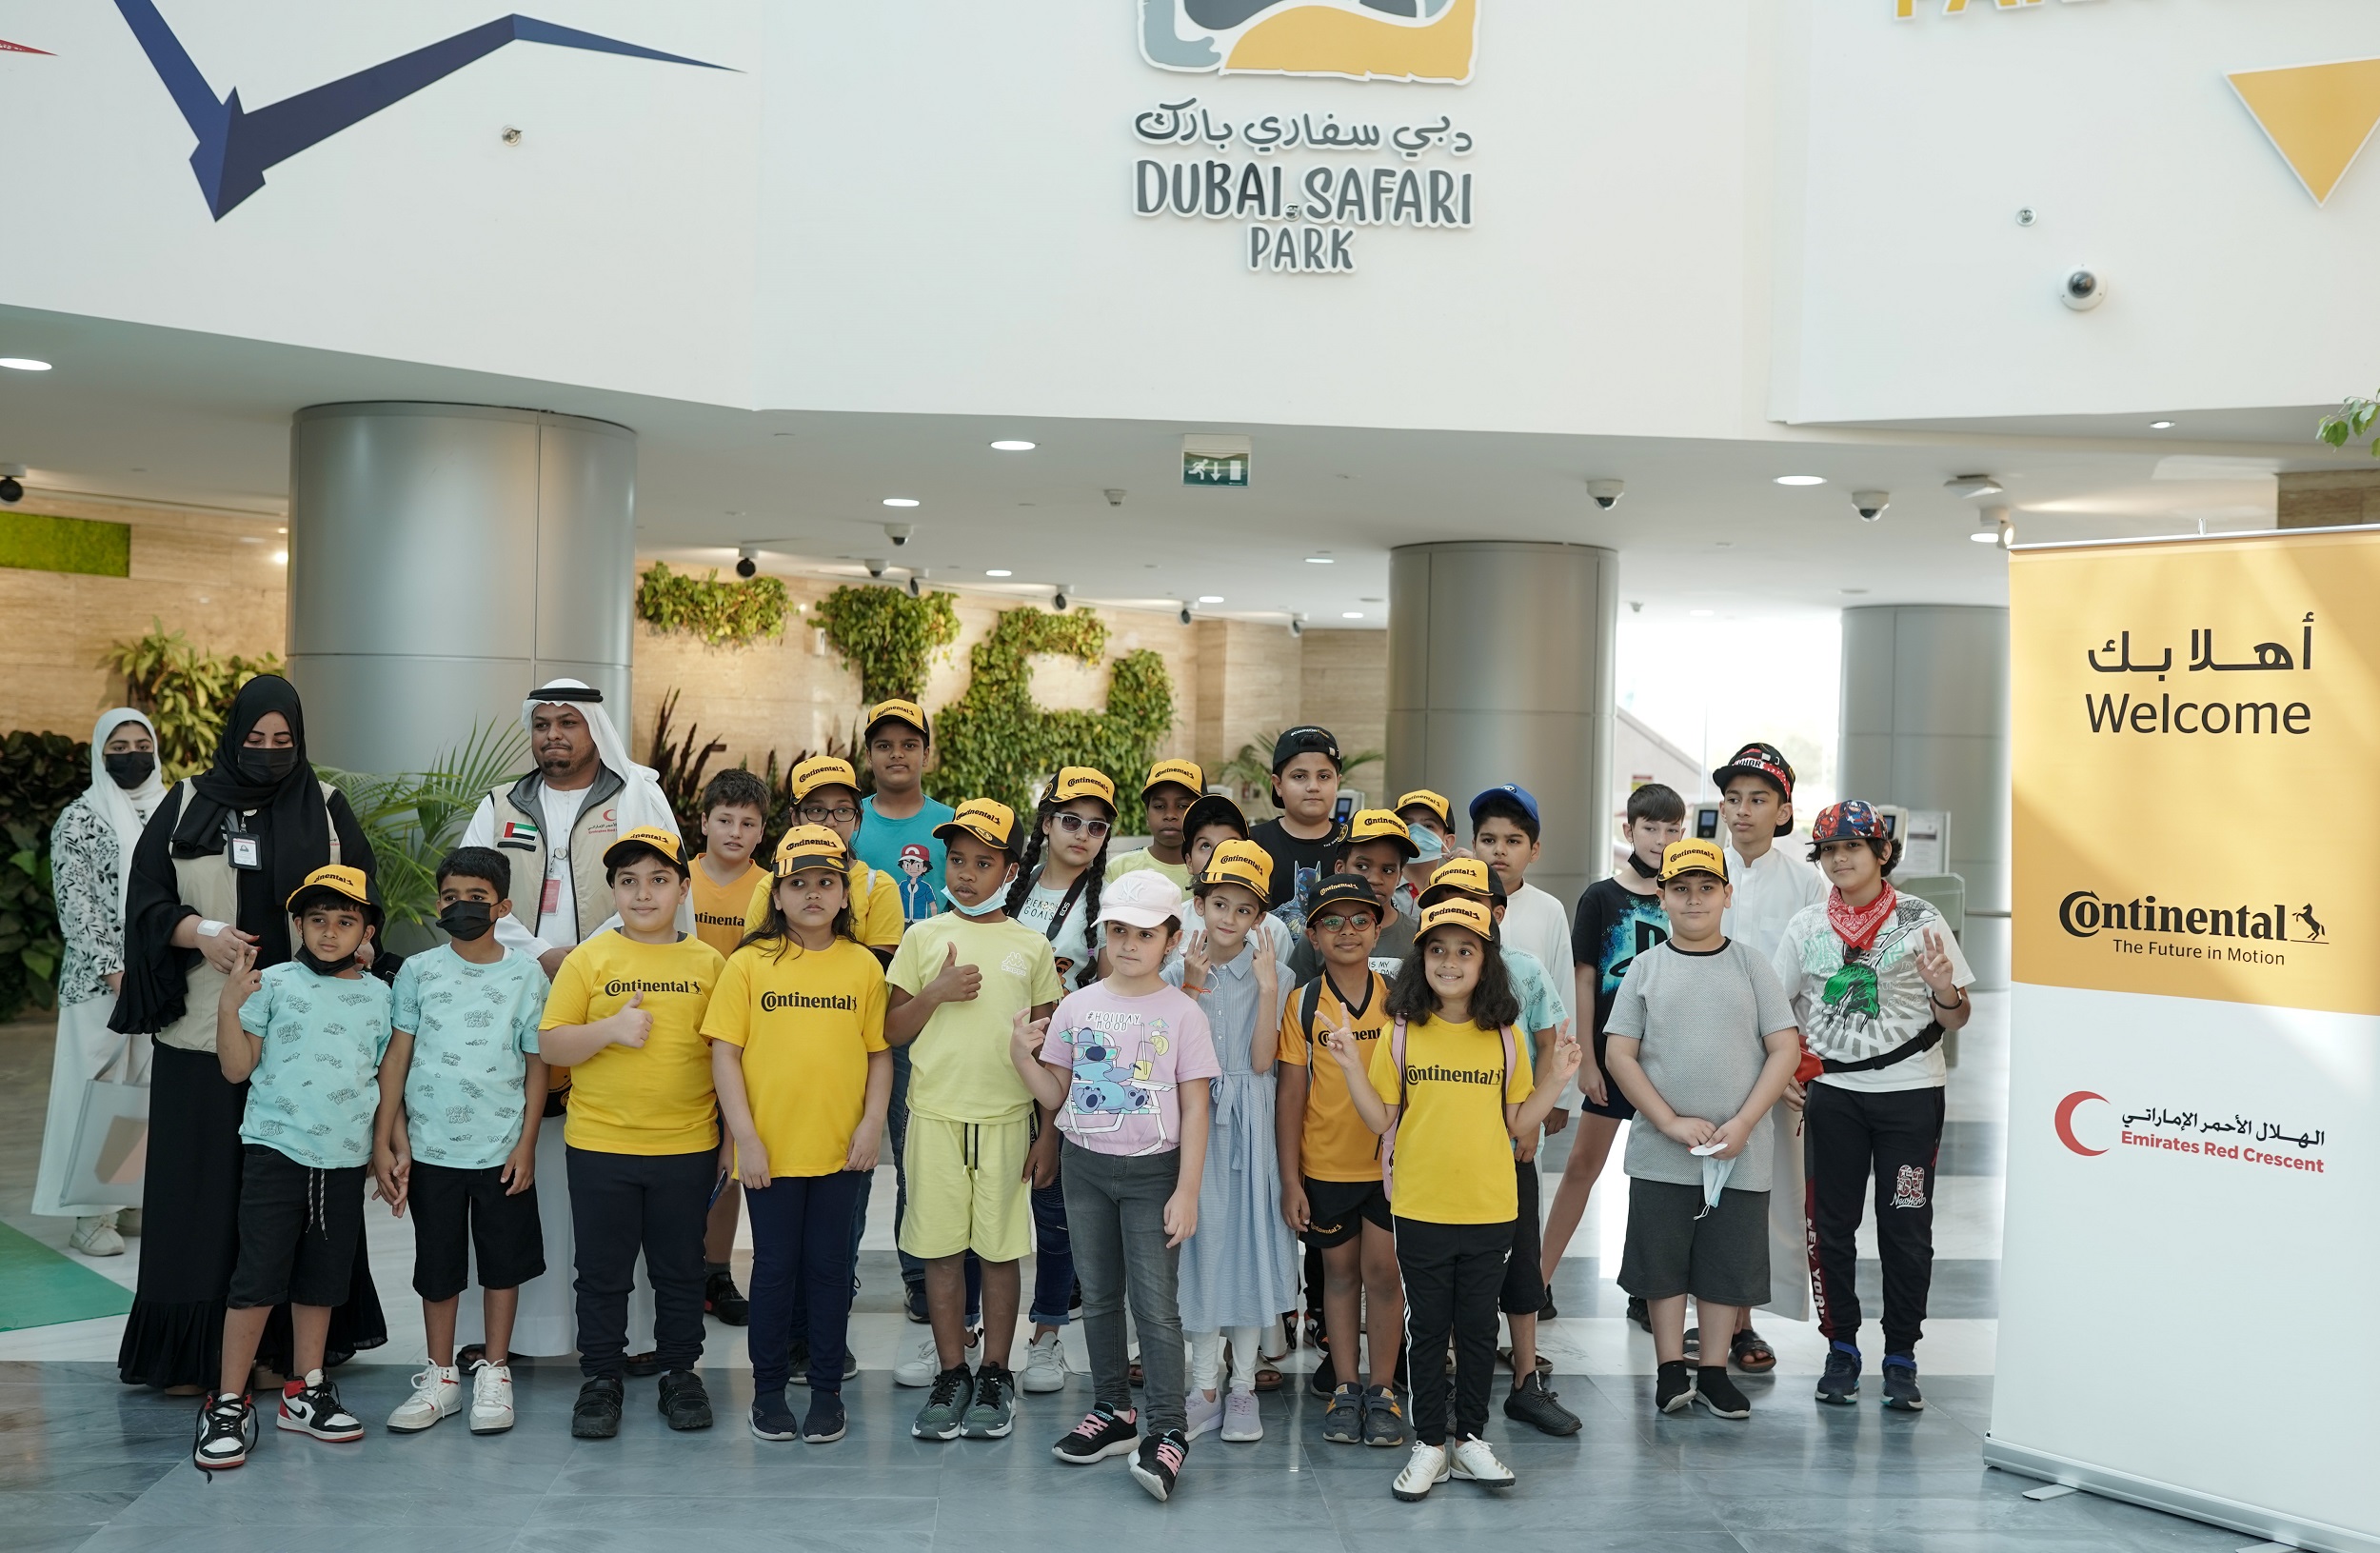 Continental and Emirates Red Crescent collaborate to invite children to the Dubai Safari Park for a memorable Ramadan experience